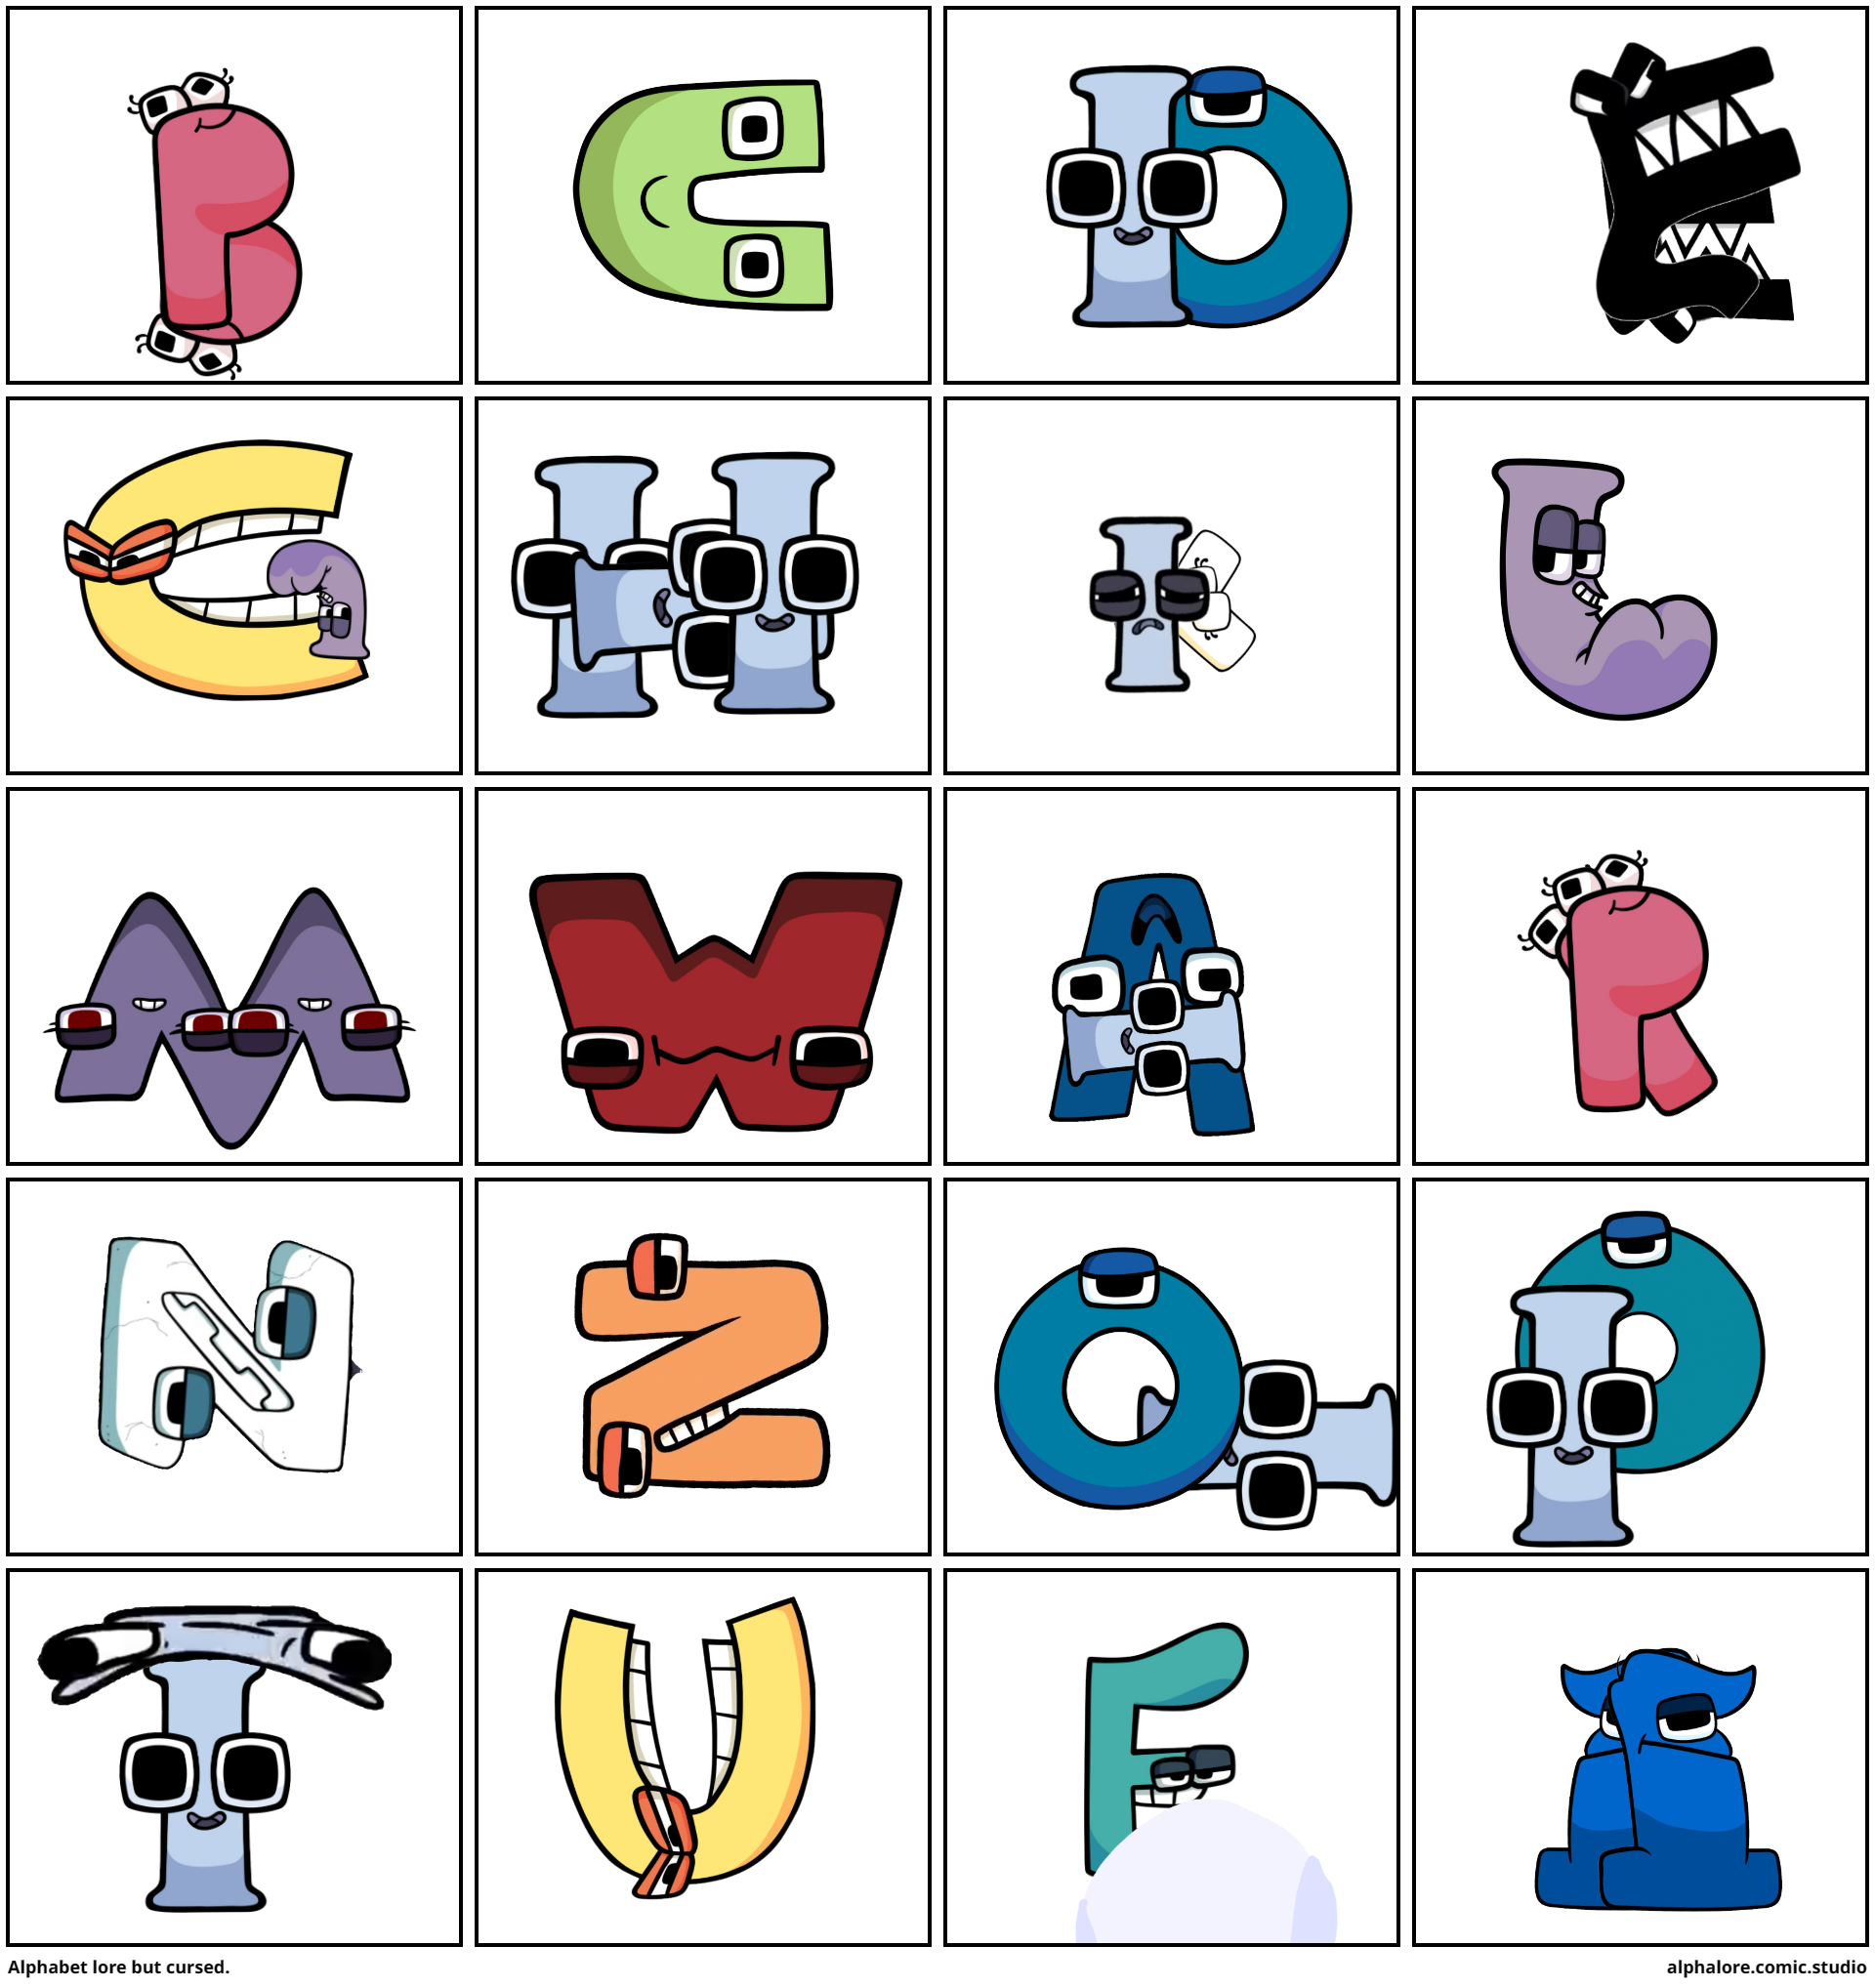 Number lore but is alphabet lore - Comic Studio